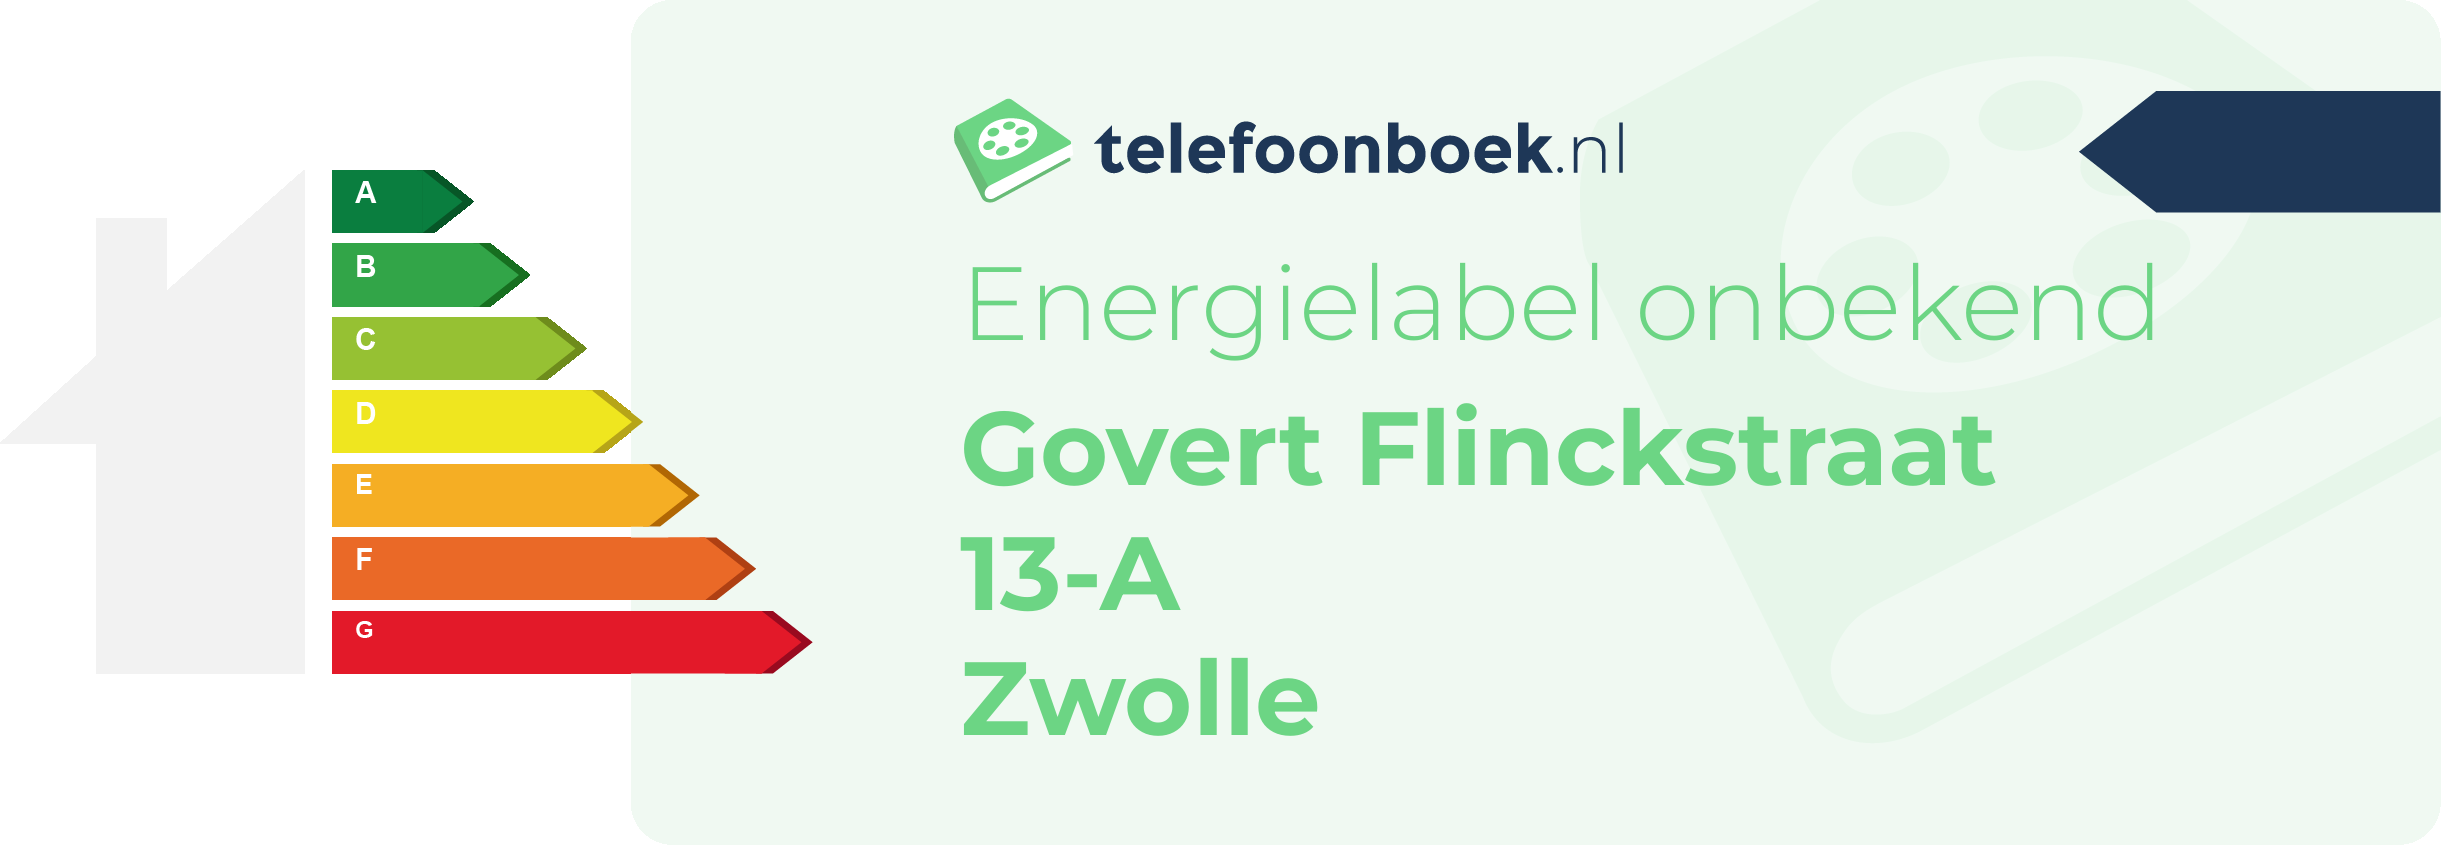 Energielabel Govert Flinckstraat 13-A Zwolle